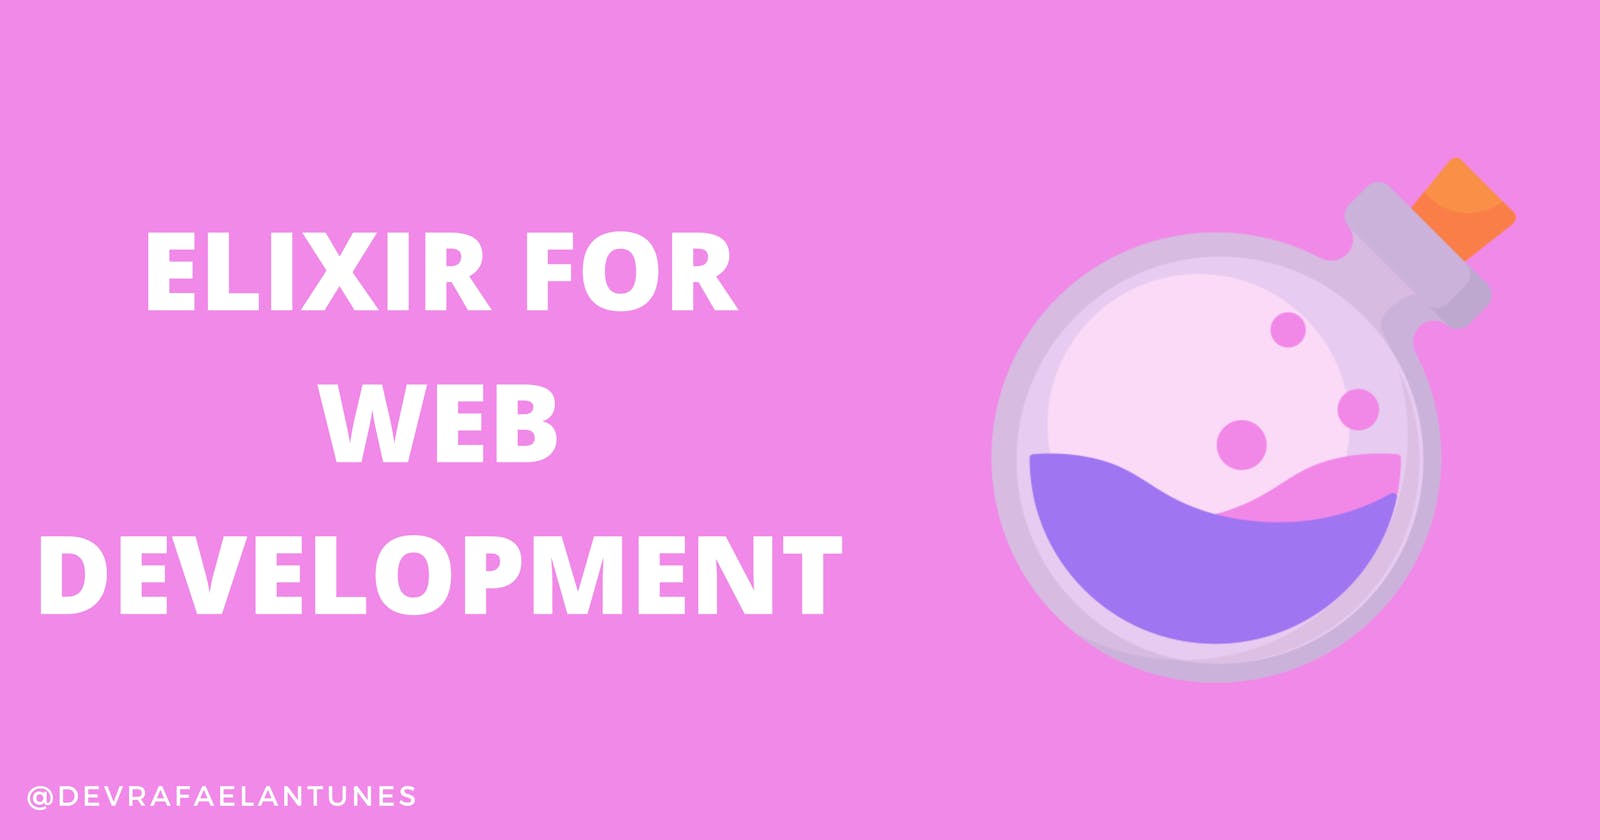 Elixir for Web Development